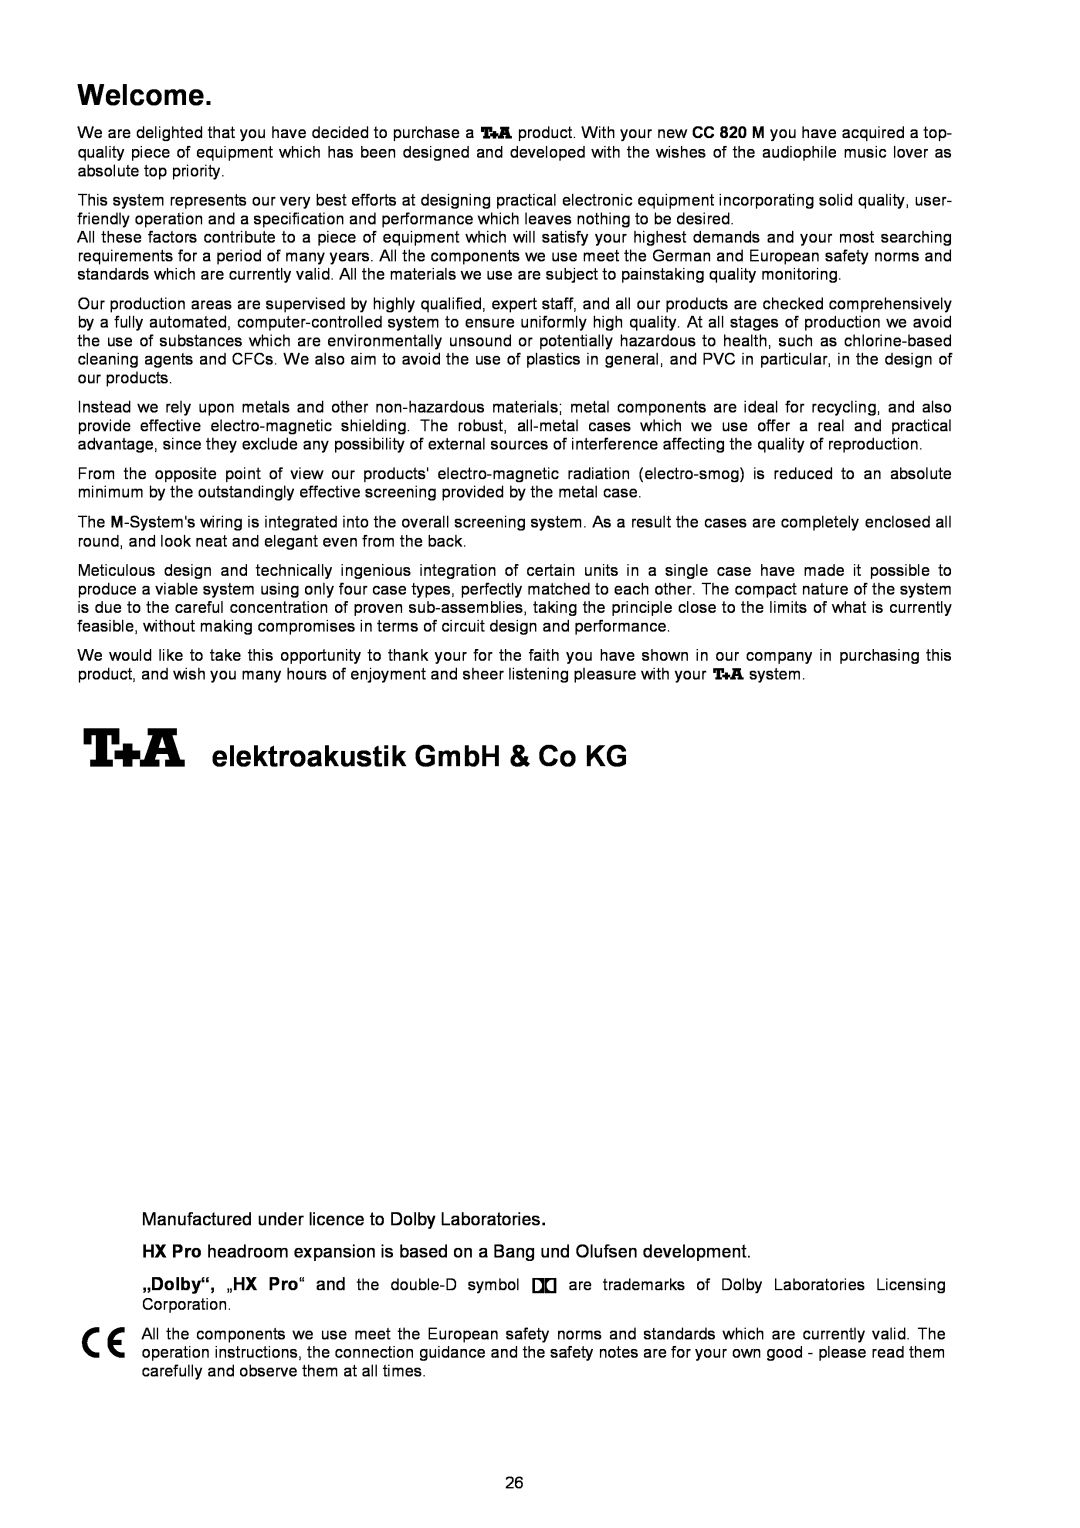 T+A Elektroakustik CC 820 M Welcome, elektroakustik GmbH & Co KG, Manufactured under licence to Dolby Laboratories 